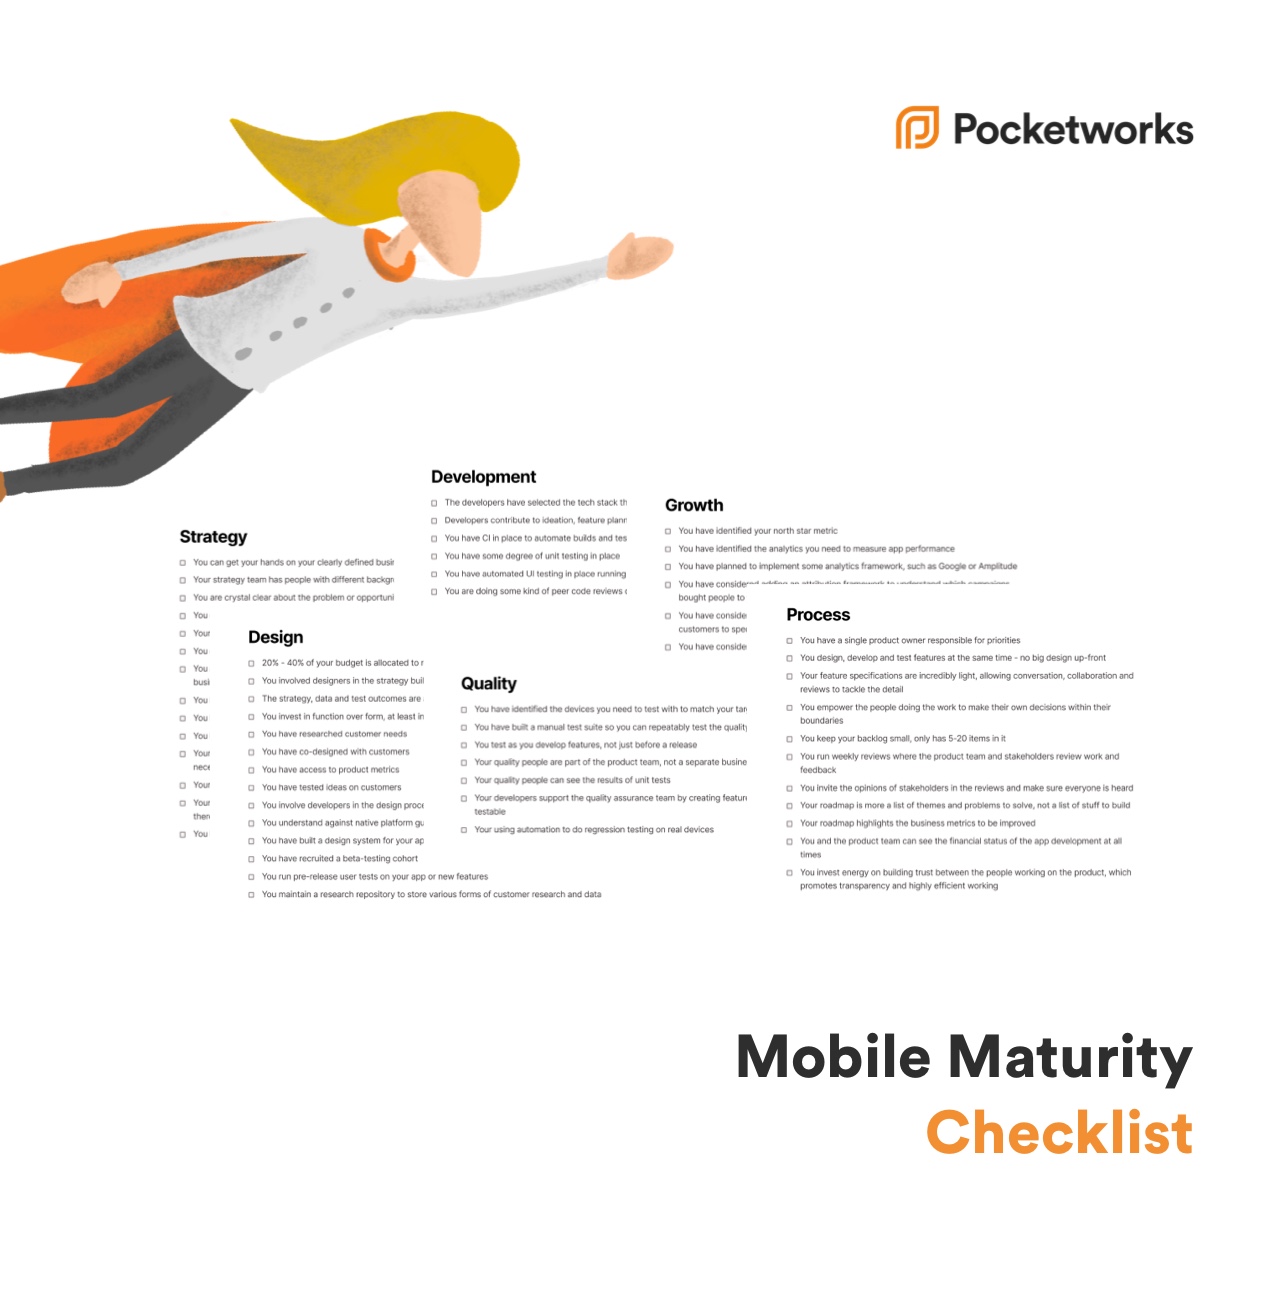 Mobile Maturity Checklist